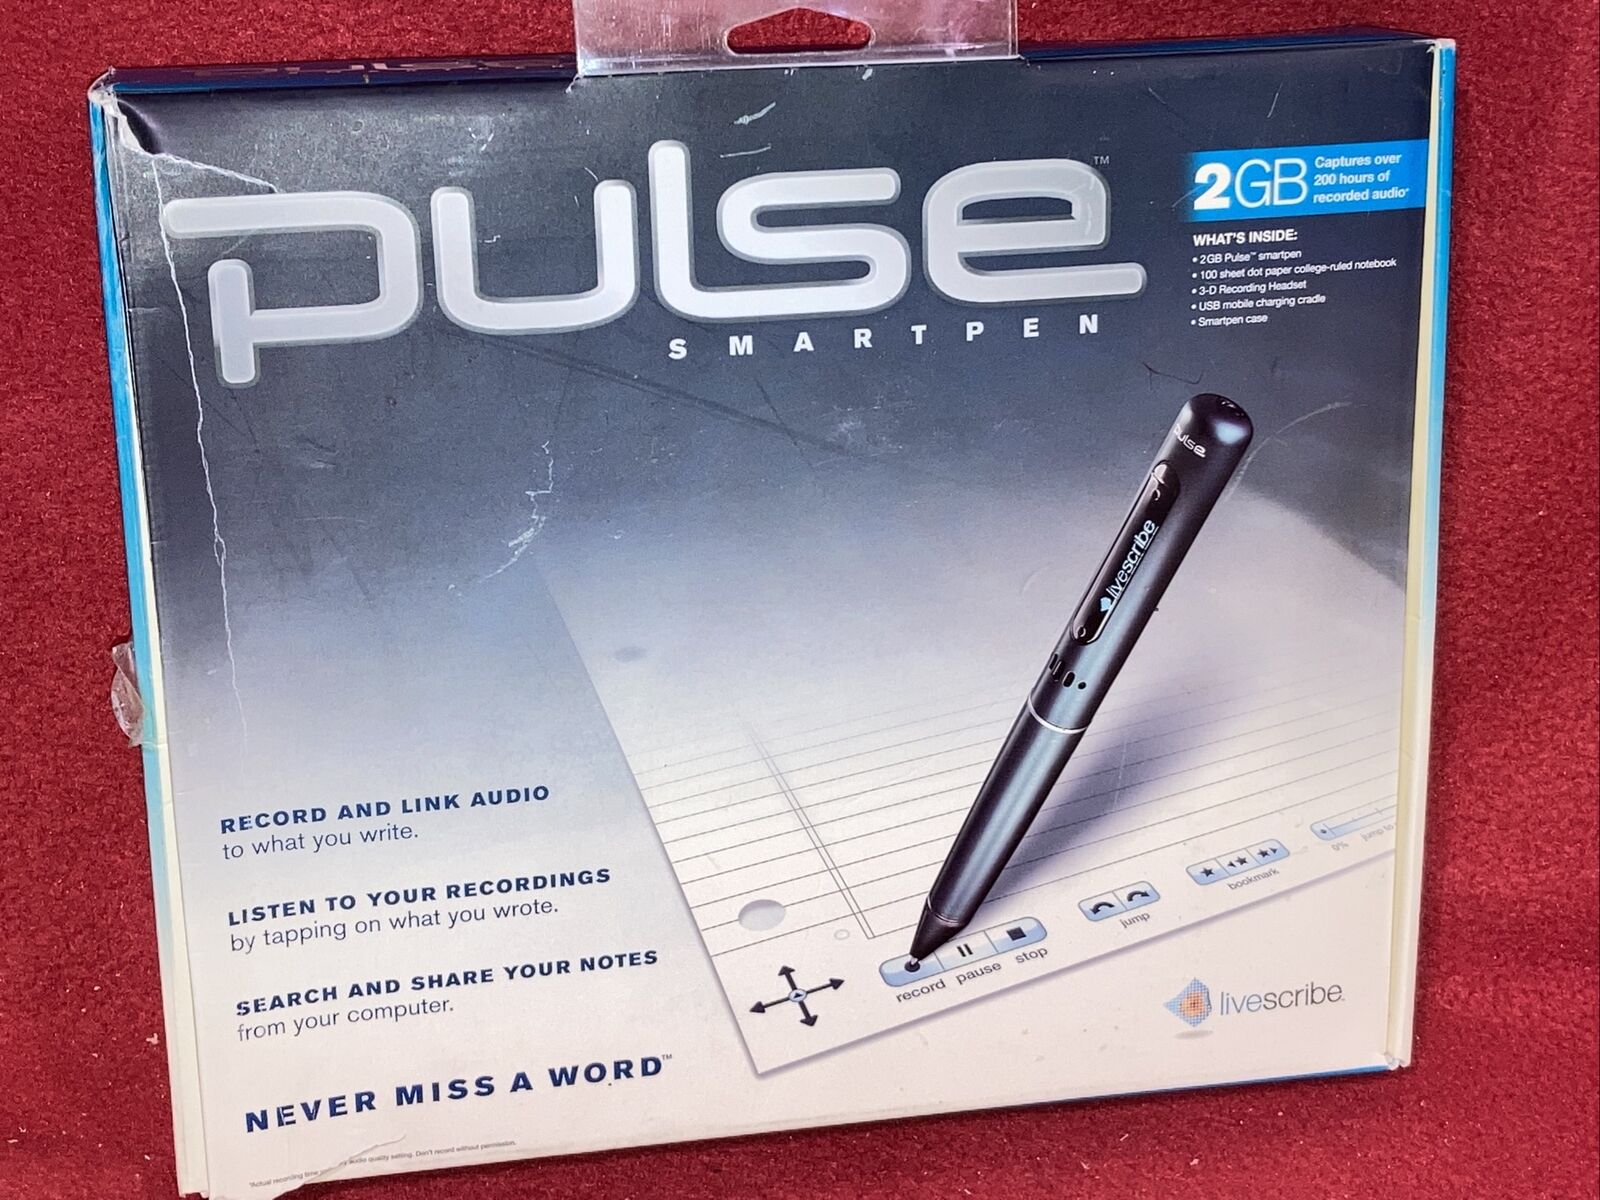 NEW Livescribe Pulse Smartpen Pen 2GB 200 hrs. Audio Recorder APA-00002 SEALED